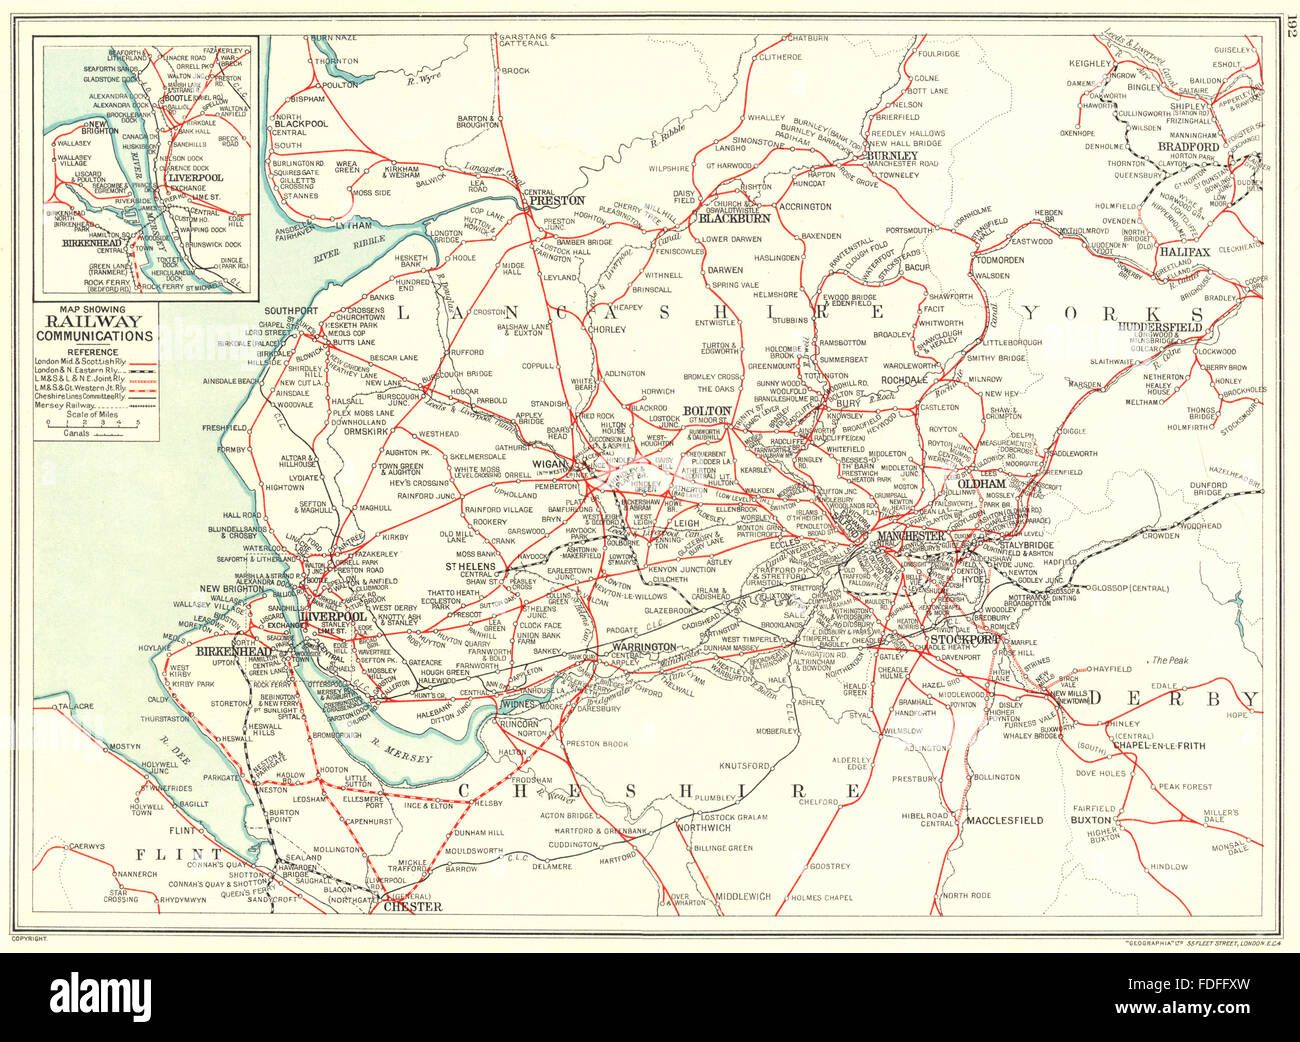 LANCASHIRE Cheshire Yorkshire Map showing Railway Communications 1935 old Stock Photo